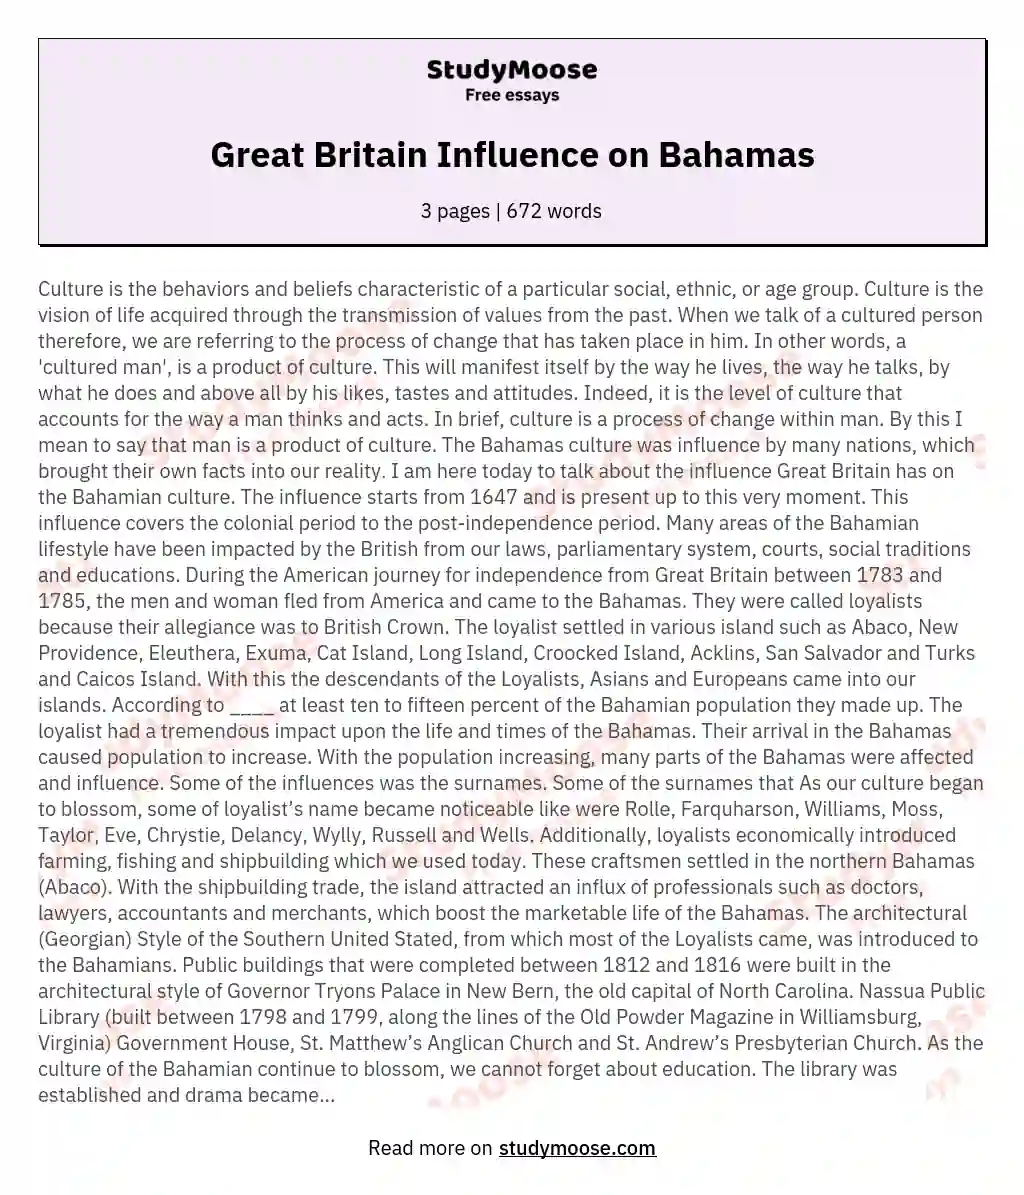 Great Britain Influence on Bahamas essay